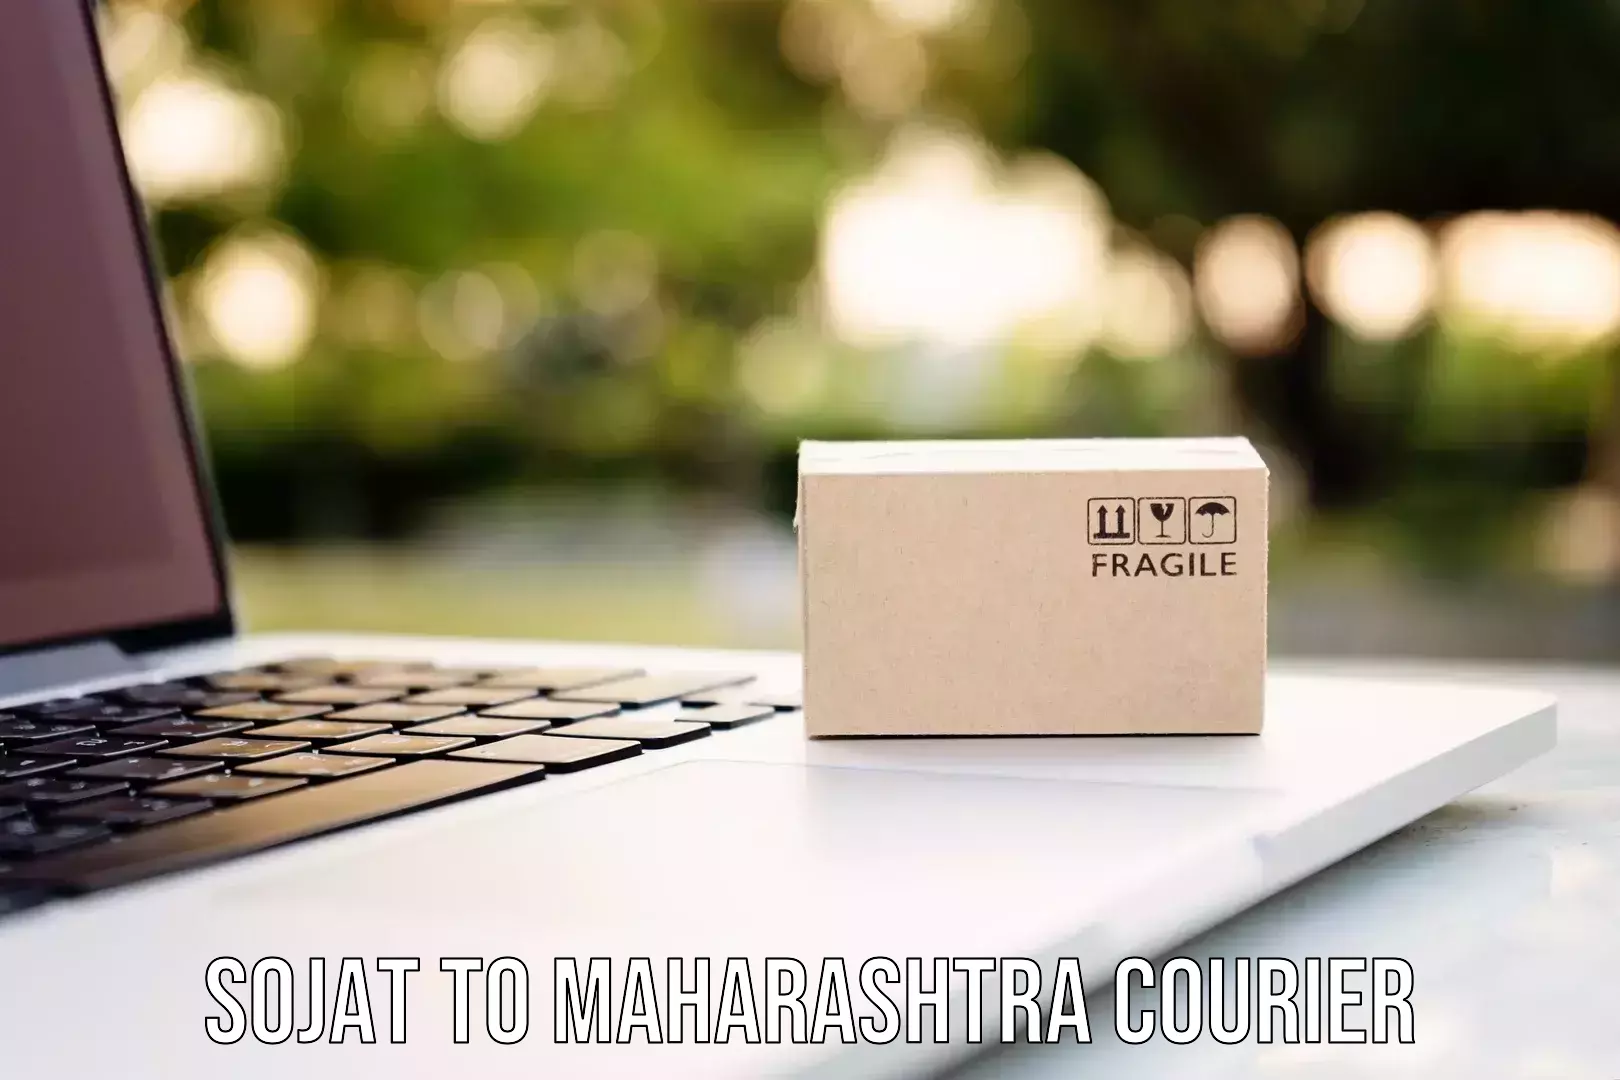 Lightweight parcel options Sojat to Maharashtra